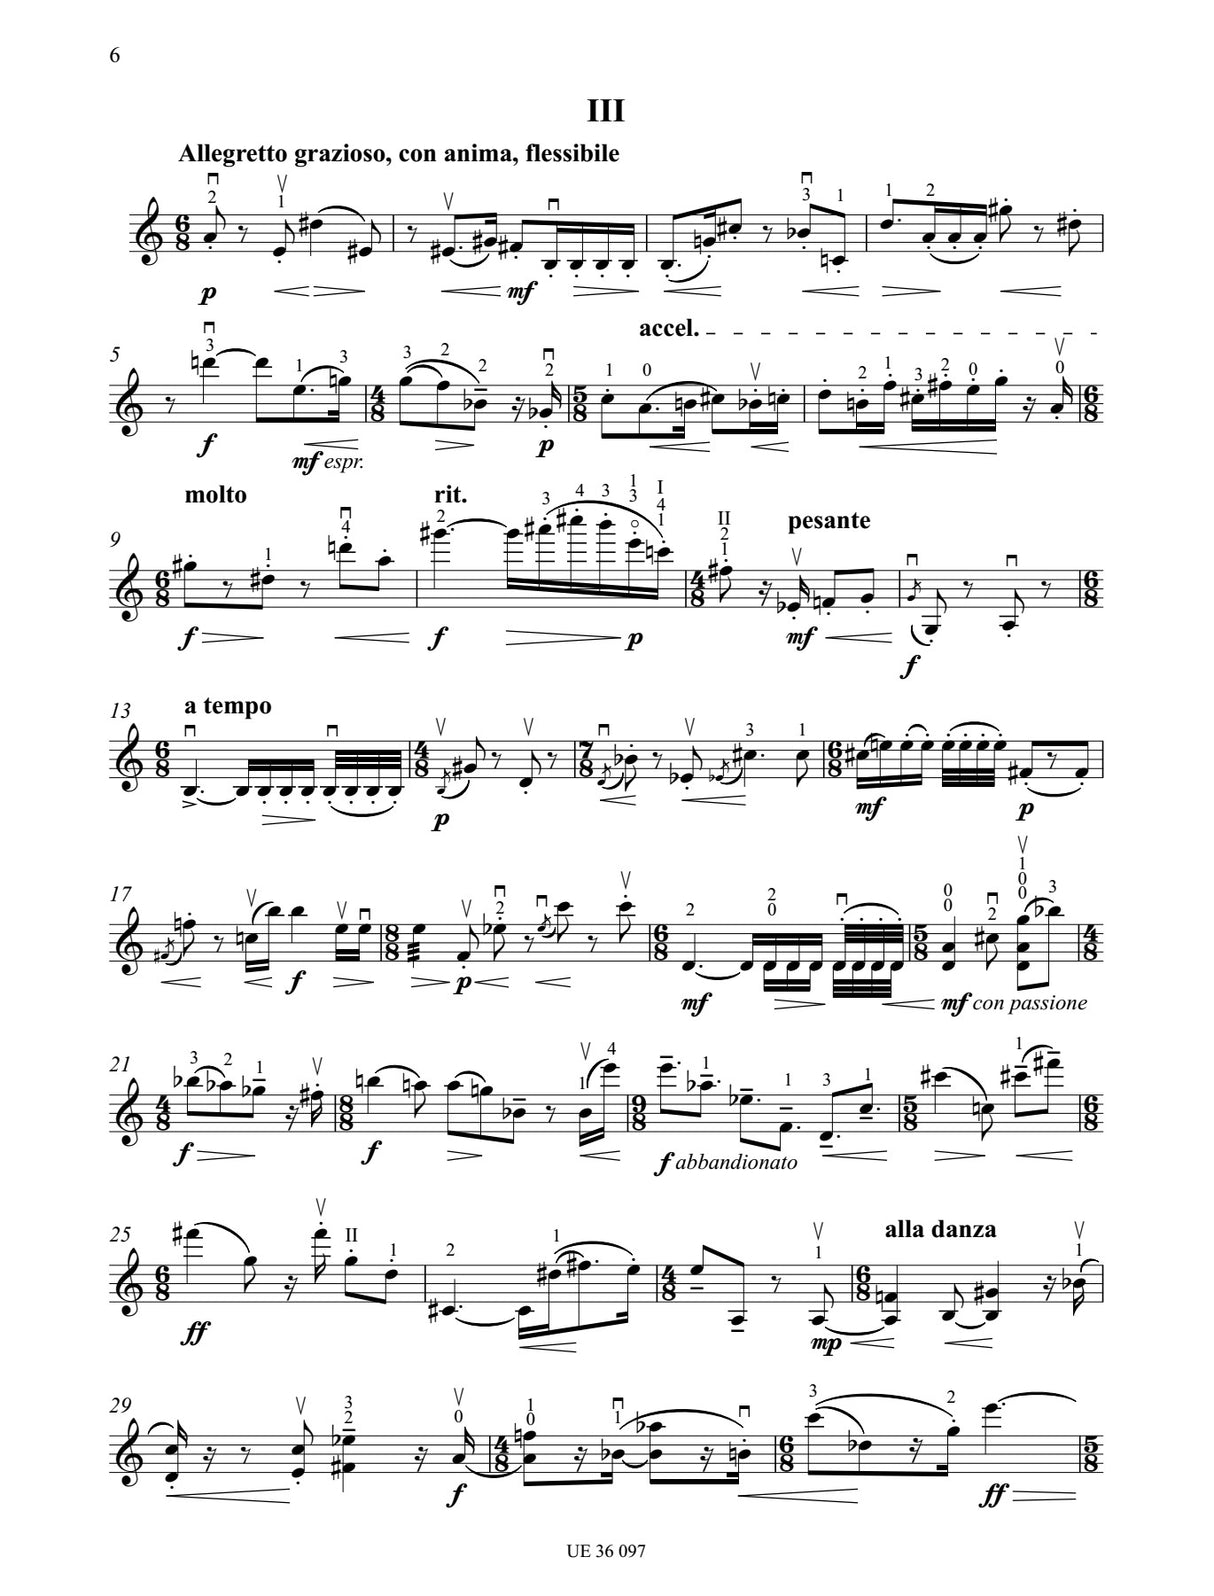 Krenek: Sonata No. 2 for Solo Violin, Op. 115